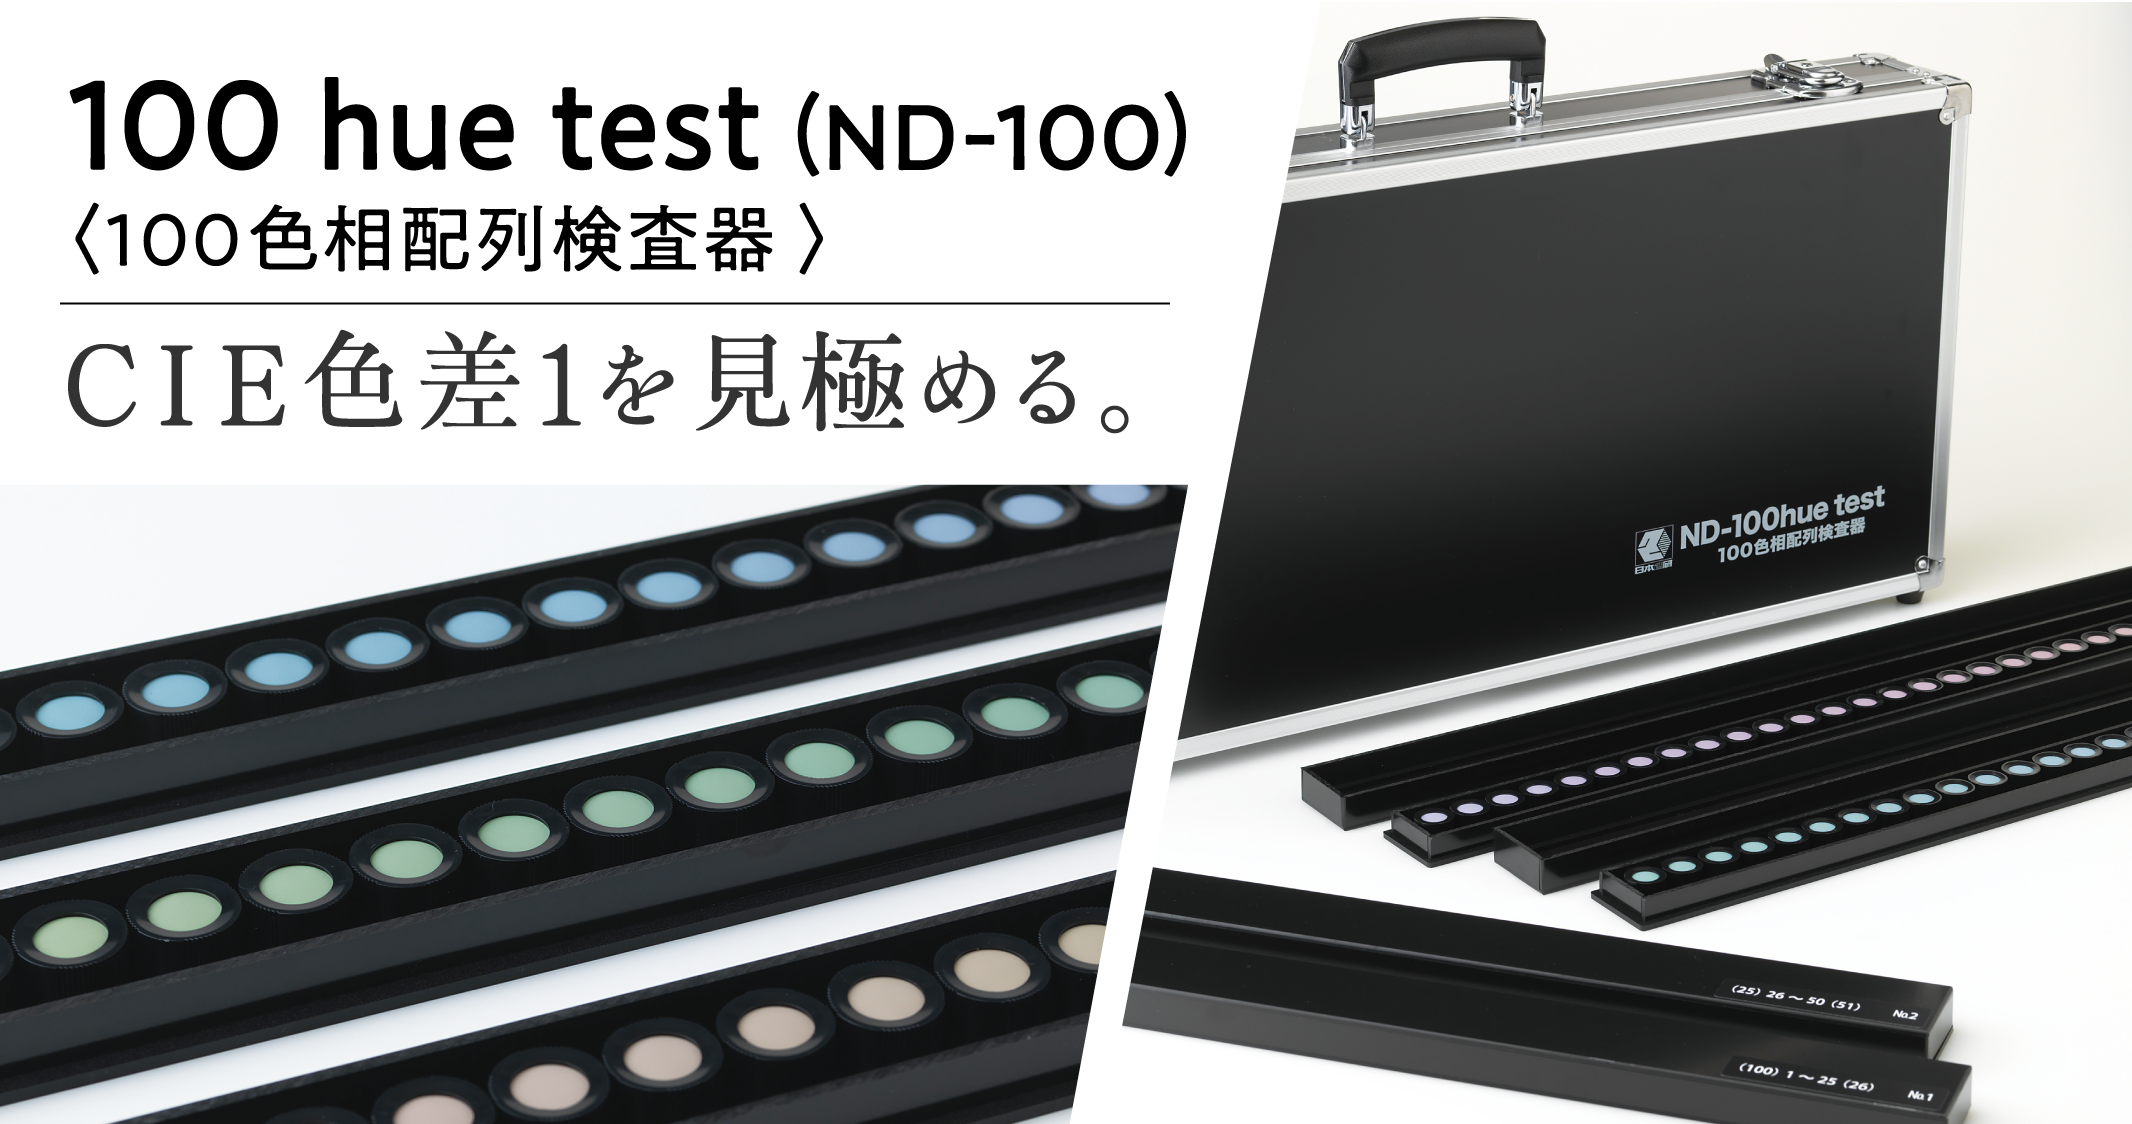 100 hue test (ND-100)